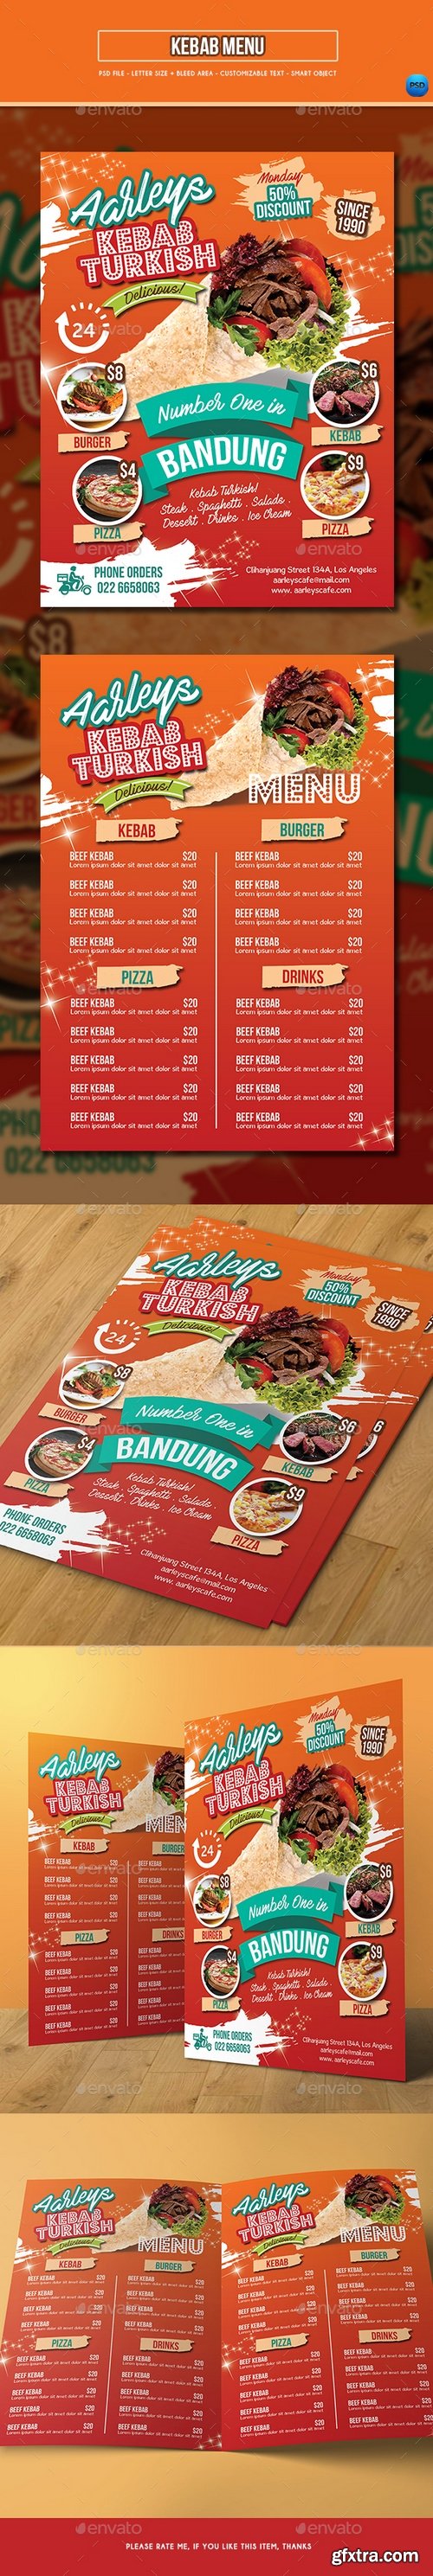 Graphicriver - Kebab Menu Template 20925151